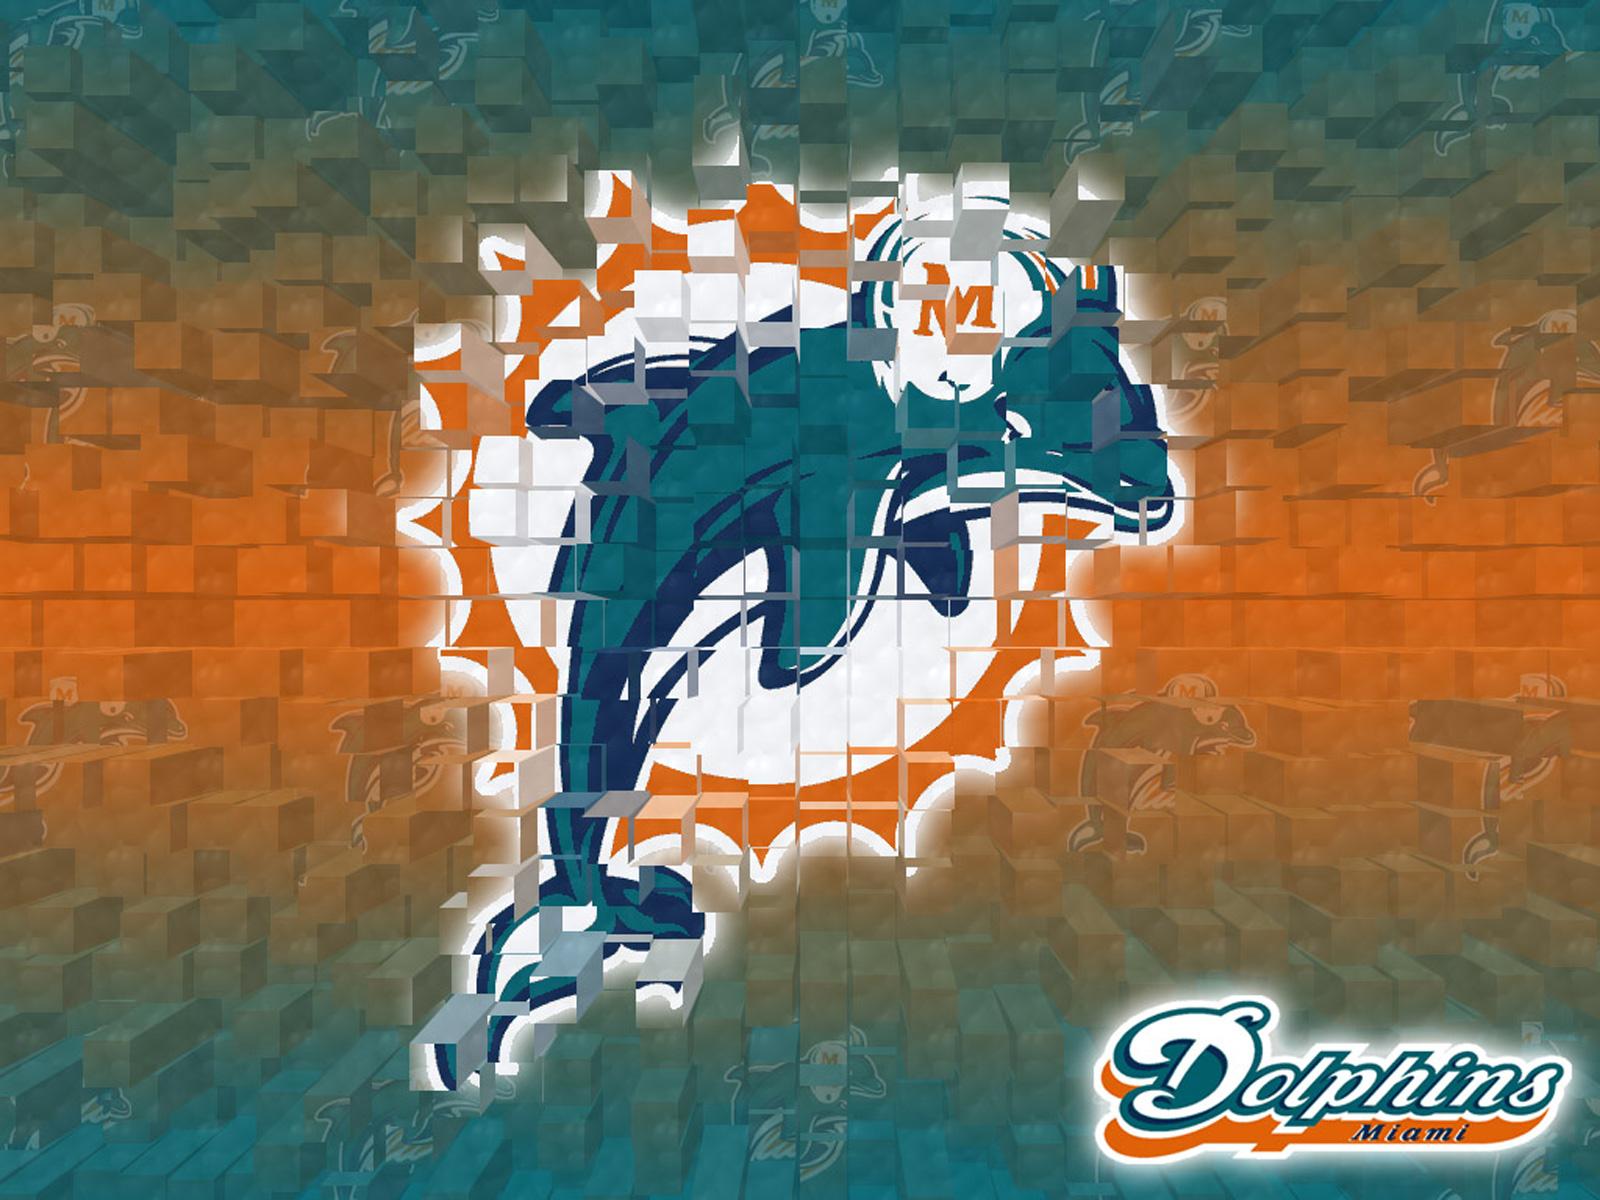 miami dolphins 3D wallpaper 720066 photo